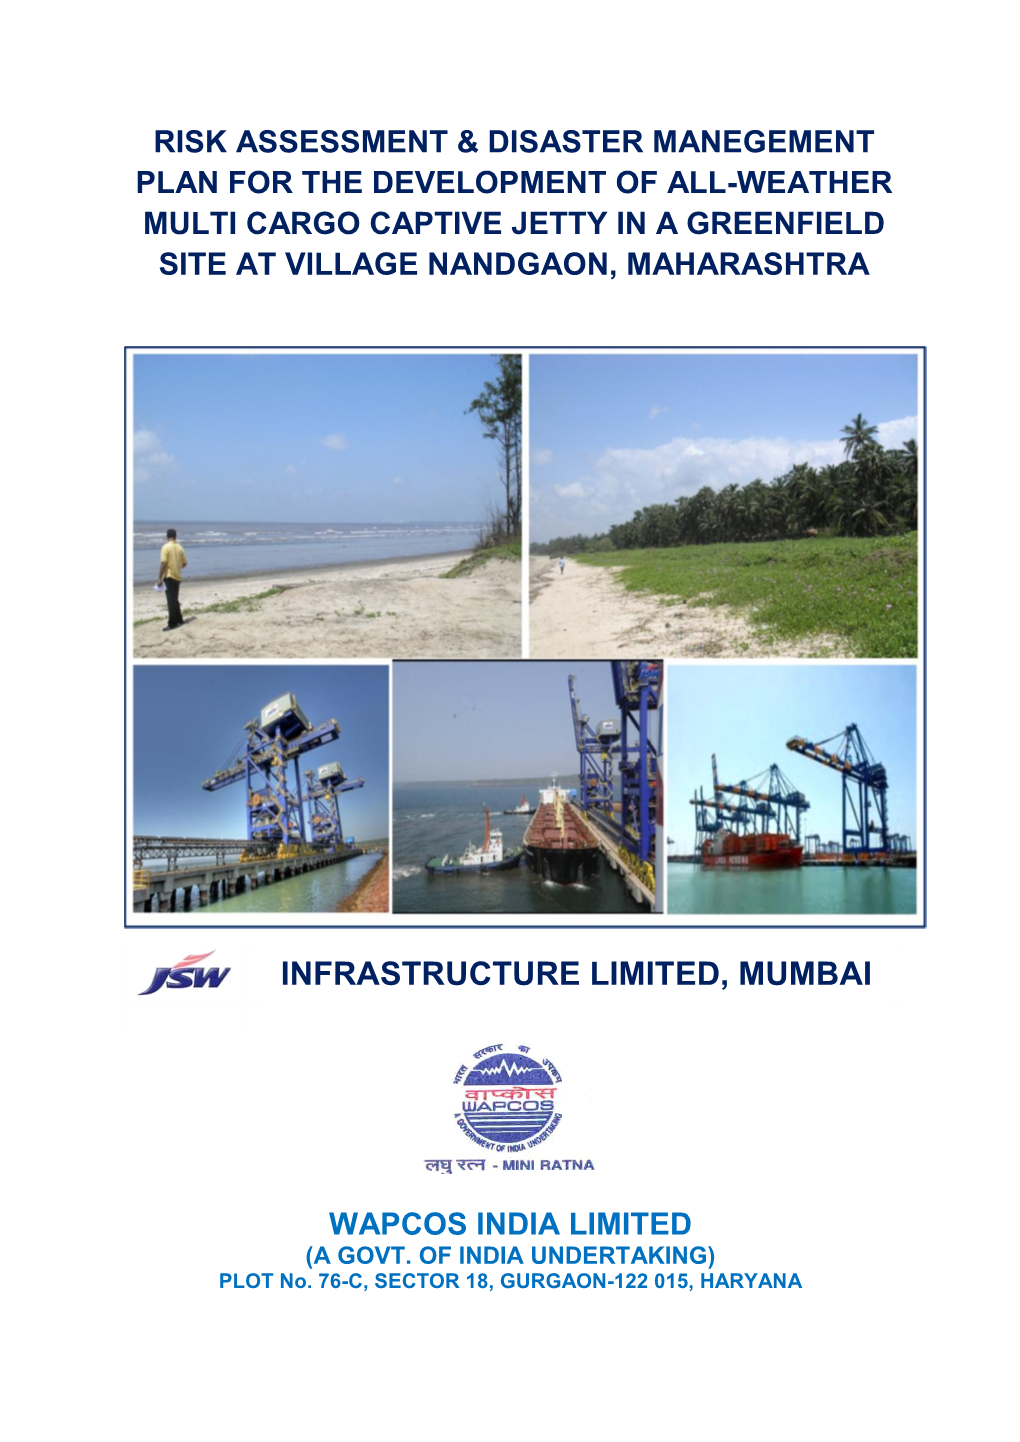 Infrastructure Limited, Mumbai